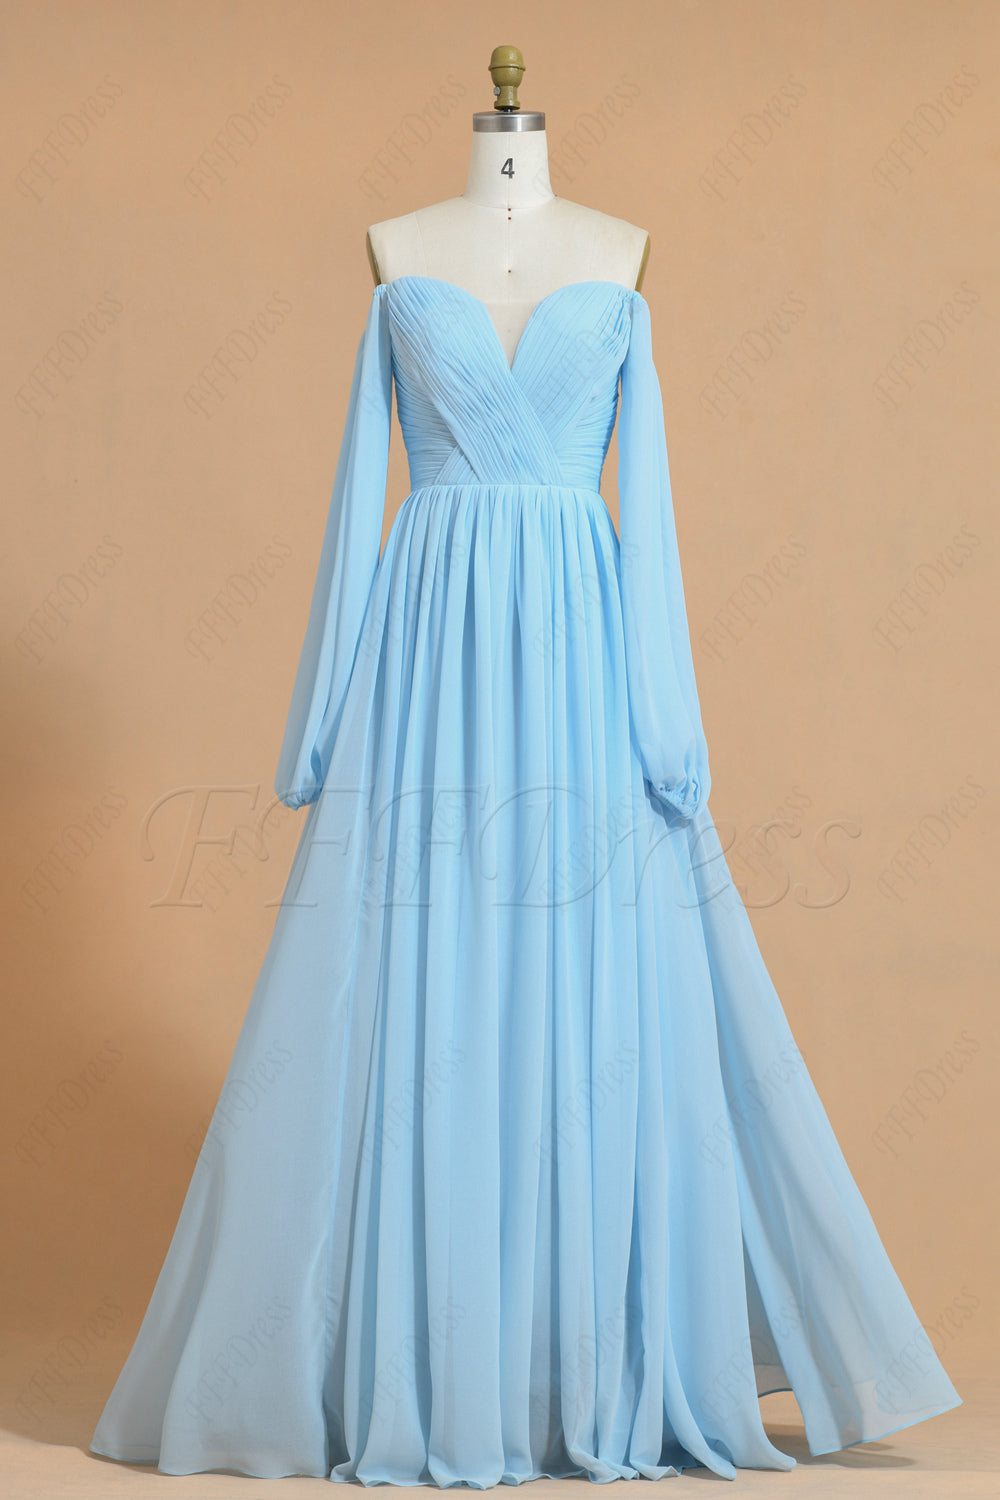 Porcelain Blue Chiffon Bridesmaid Dresses Long Sleeves